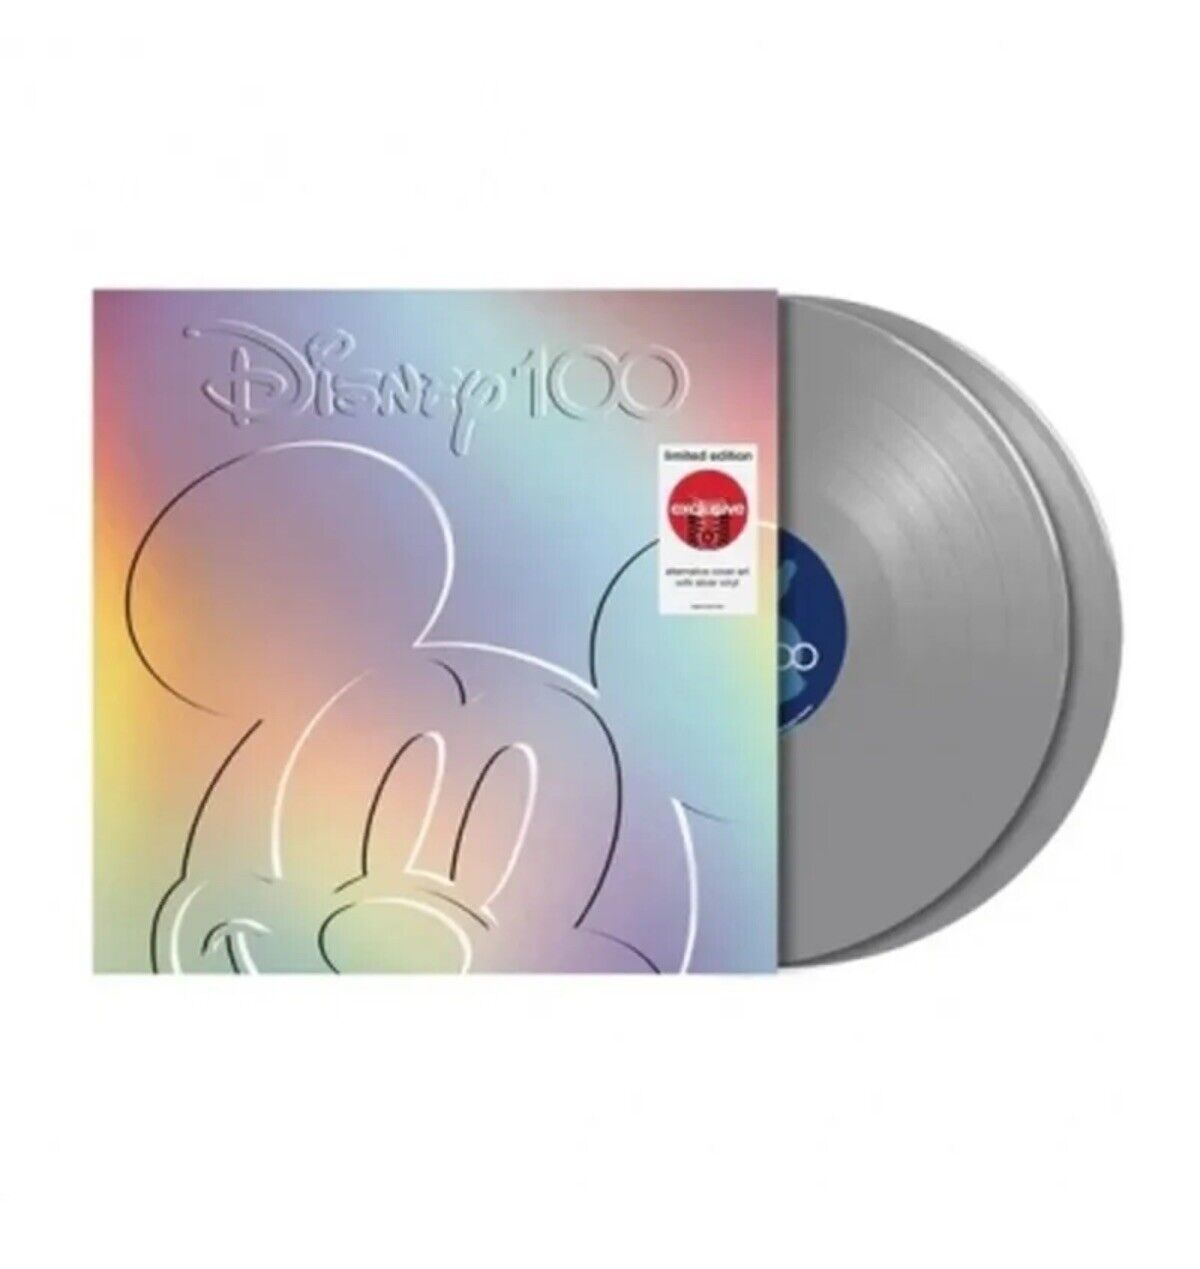 Disney 100 Limited Edition Silver Vinyl 2 LP